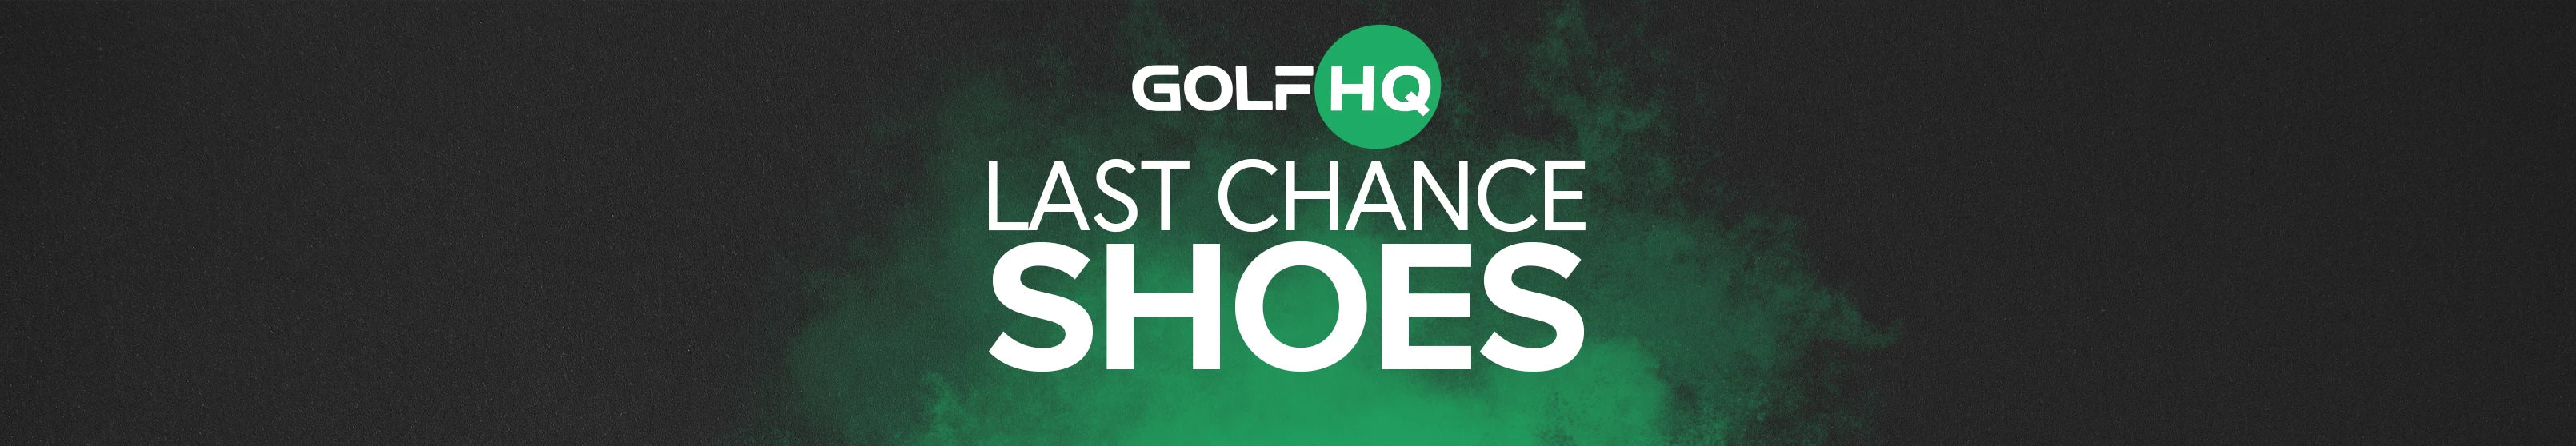 Last Chance Golf Shoes